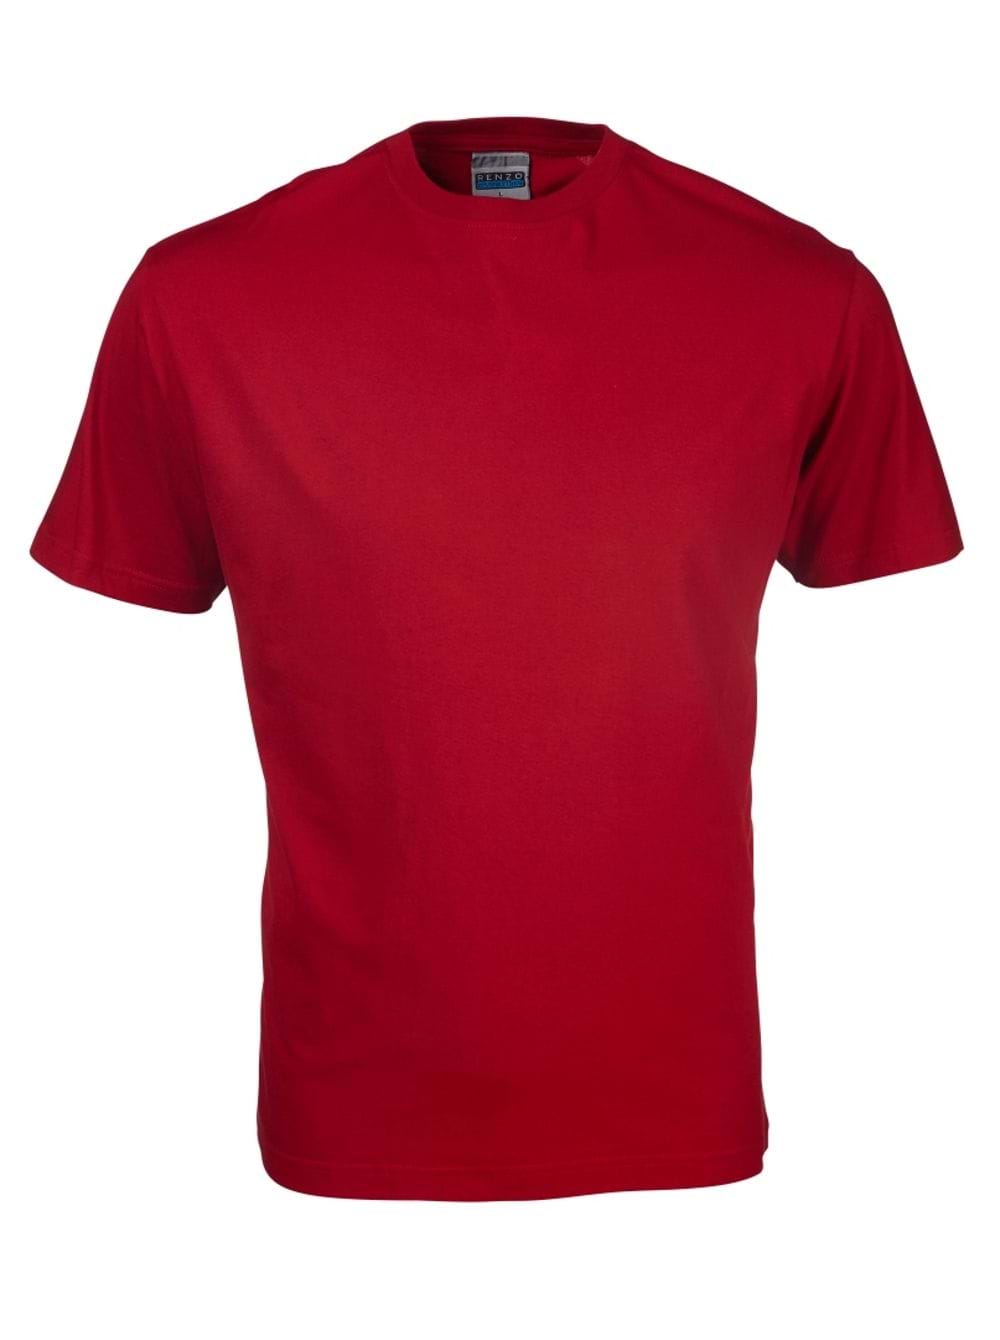 165G Crew Neck T-Shirt - Cerise Red / L